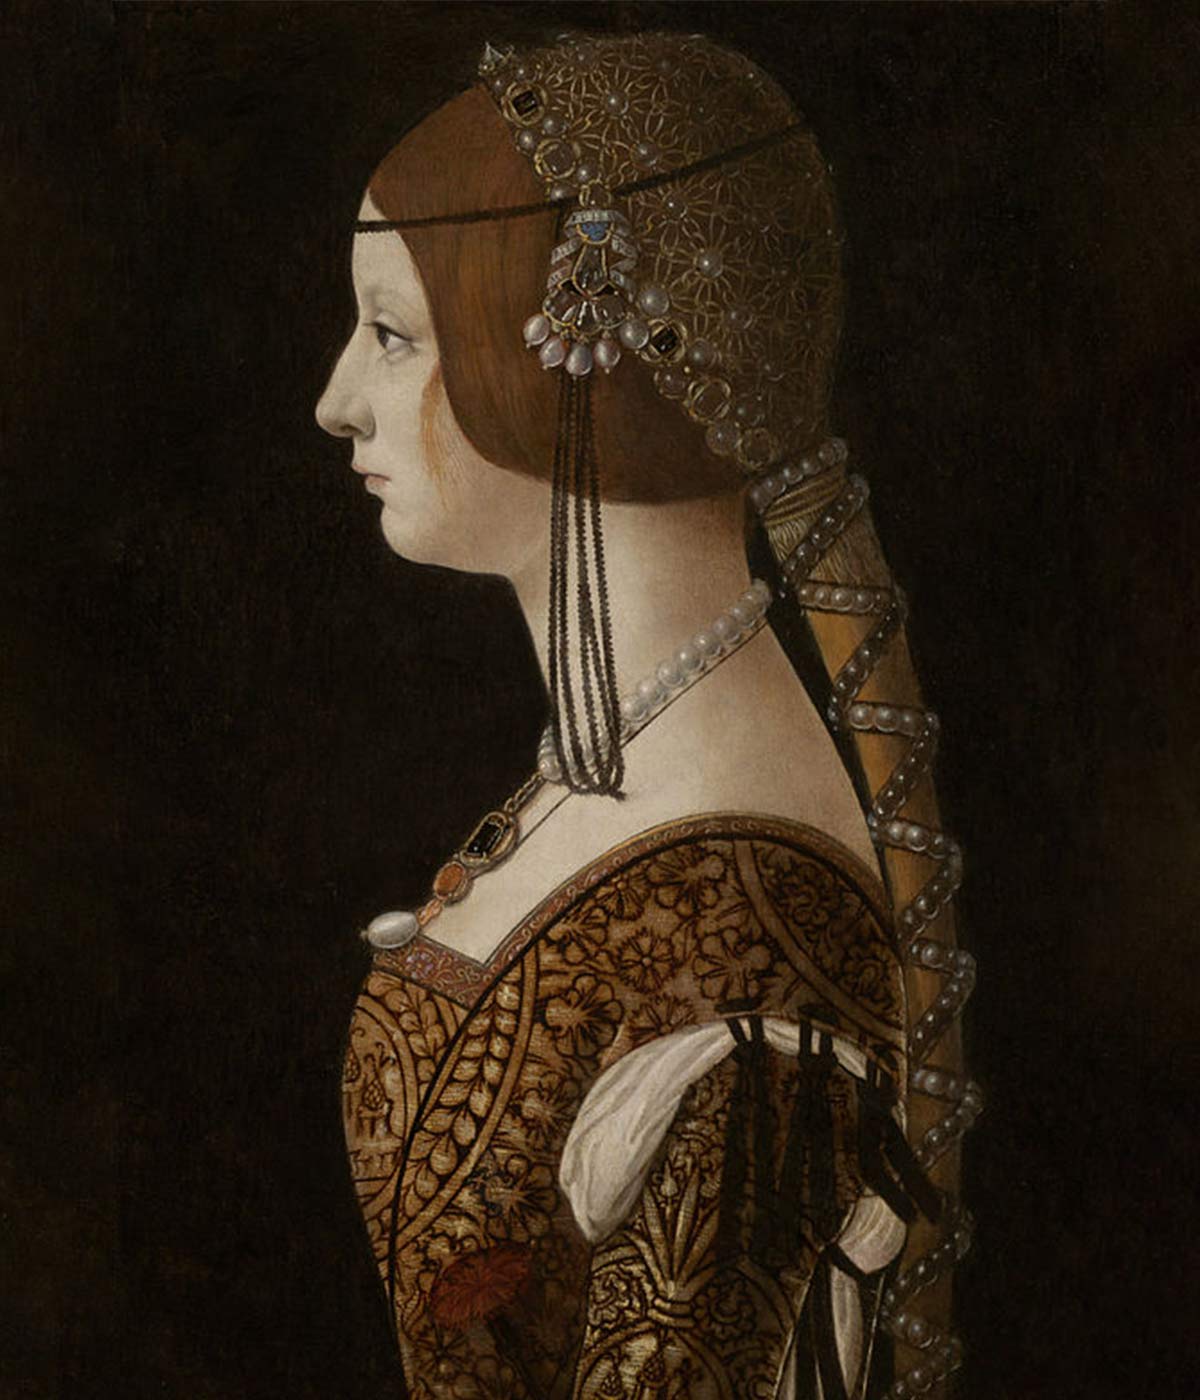 Biancas Portrait, gemalt von Ambrogio de Predis, einem Schüler Leonardo da Vincis. 